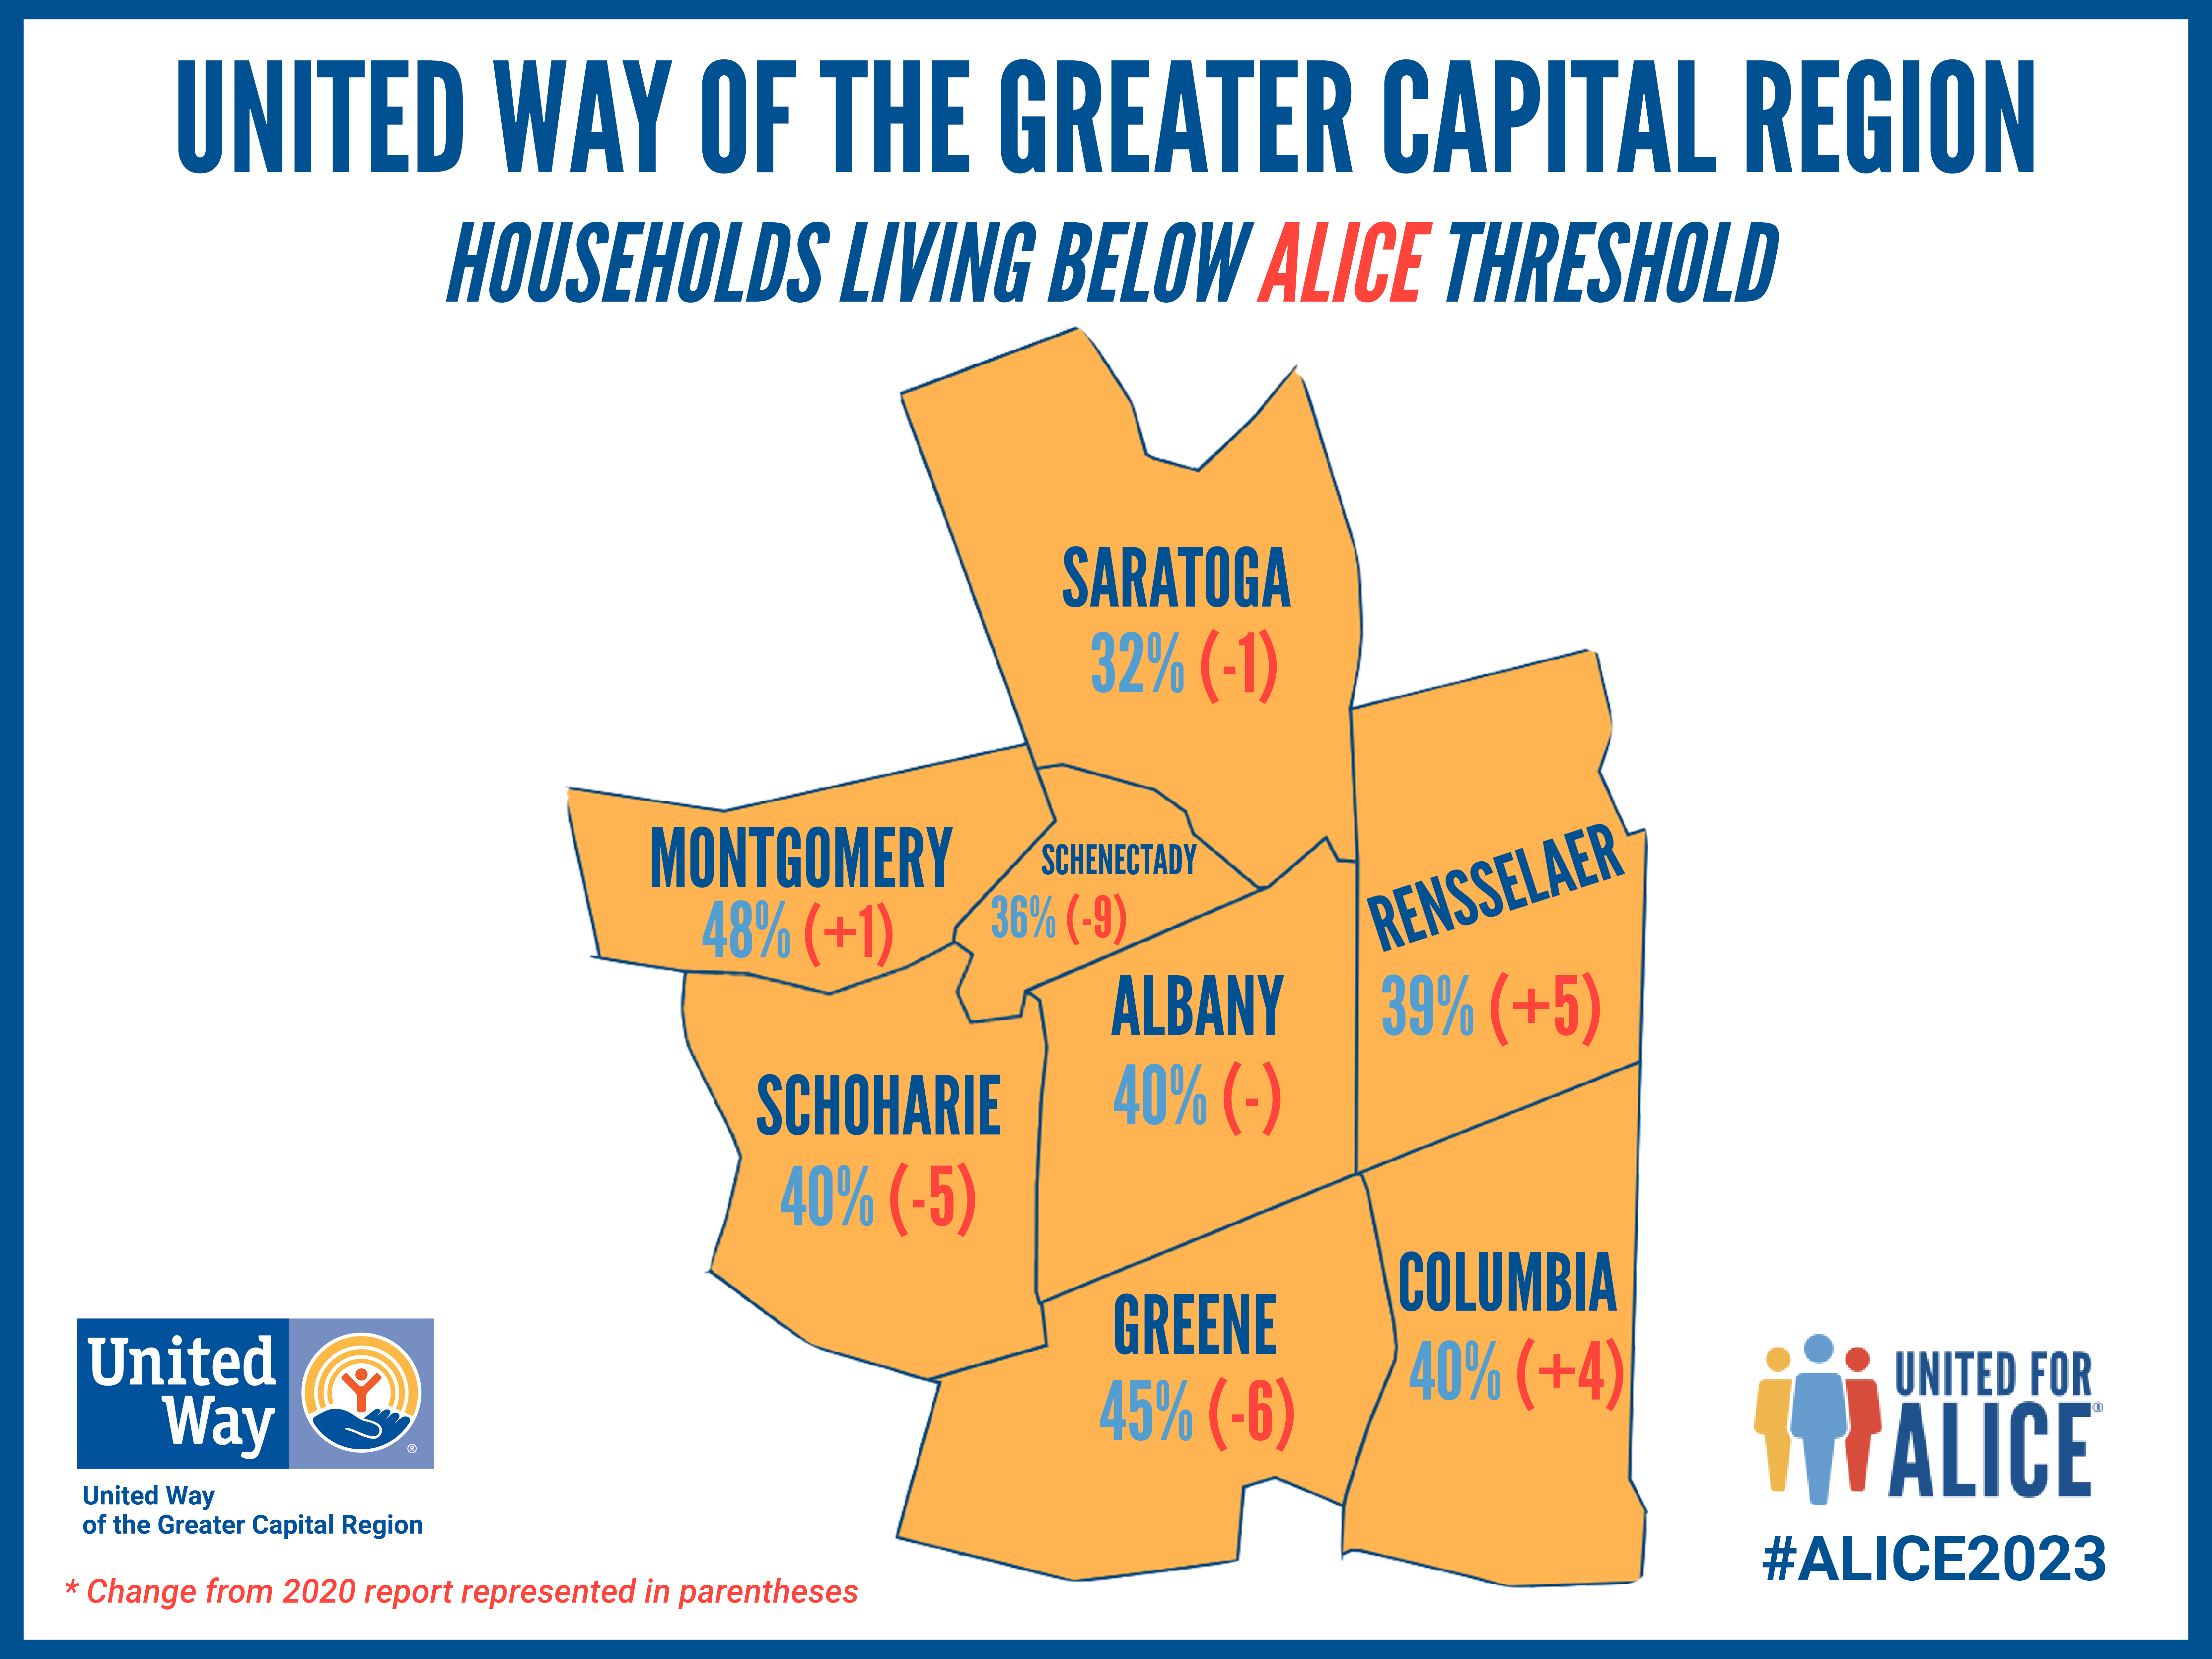 Capital Region ALICE household breakdown